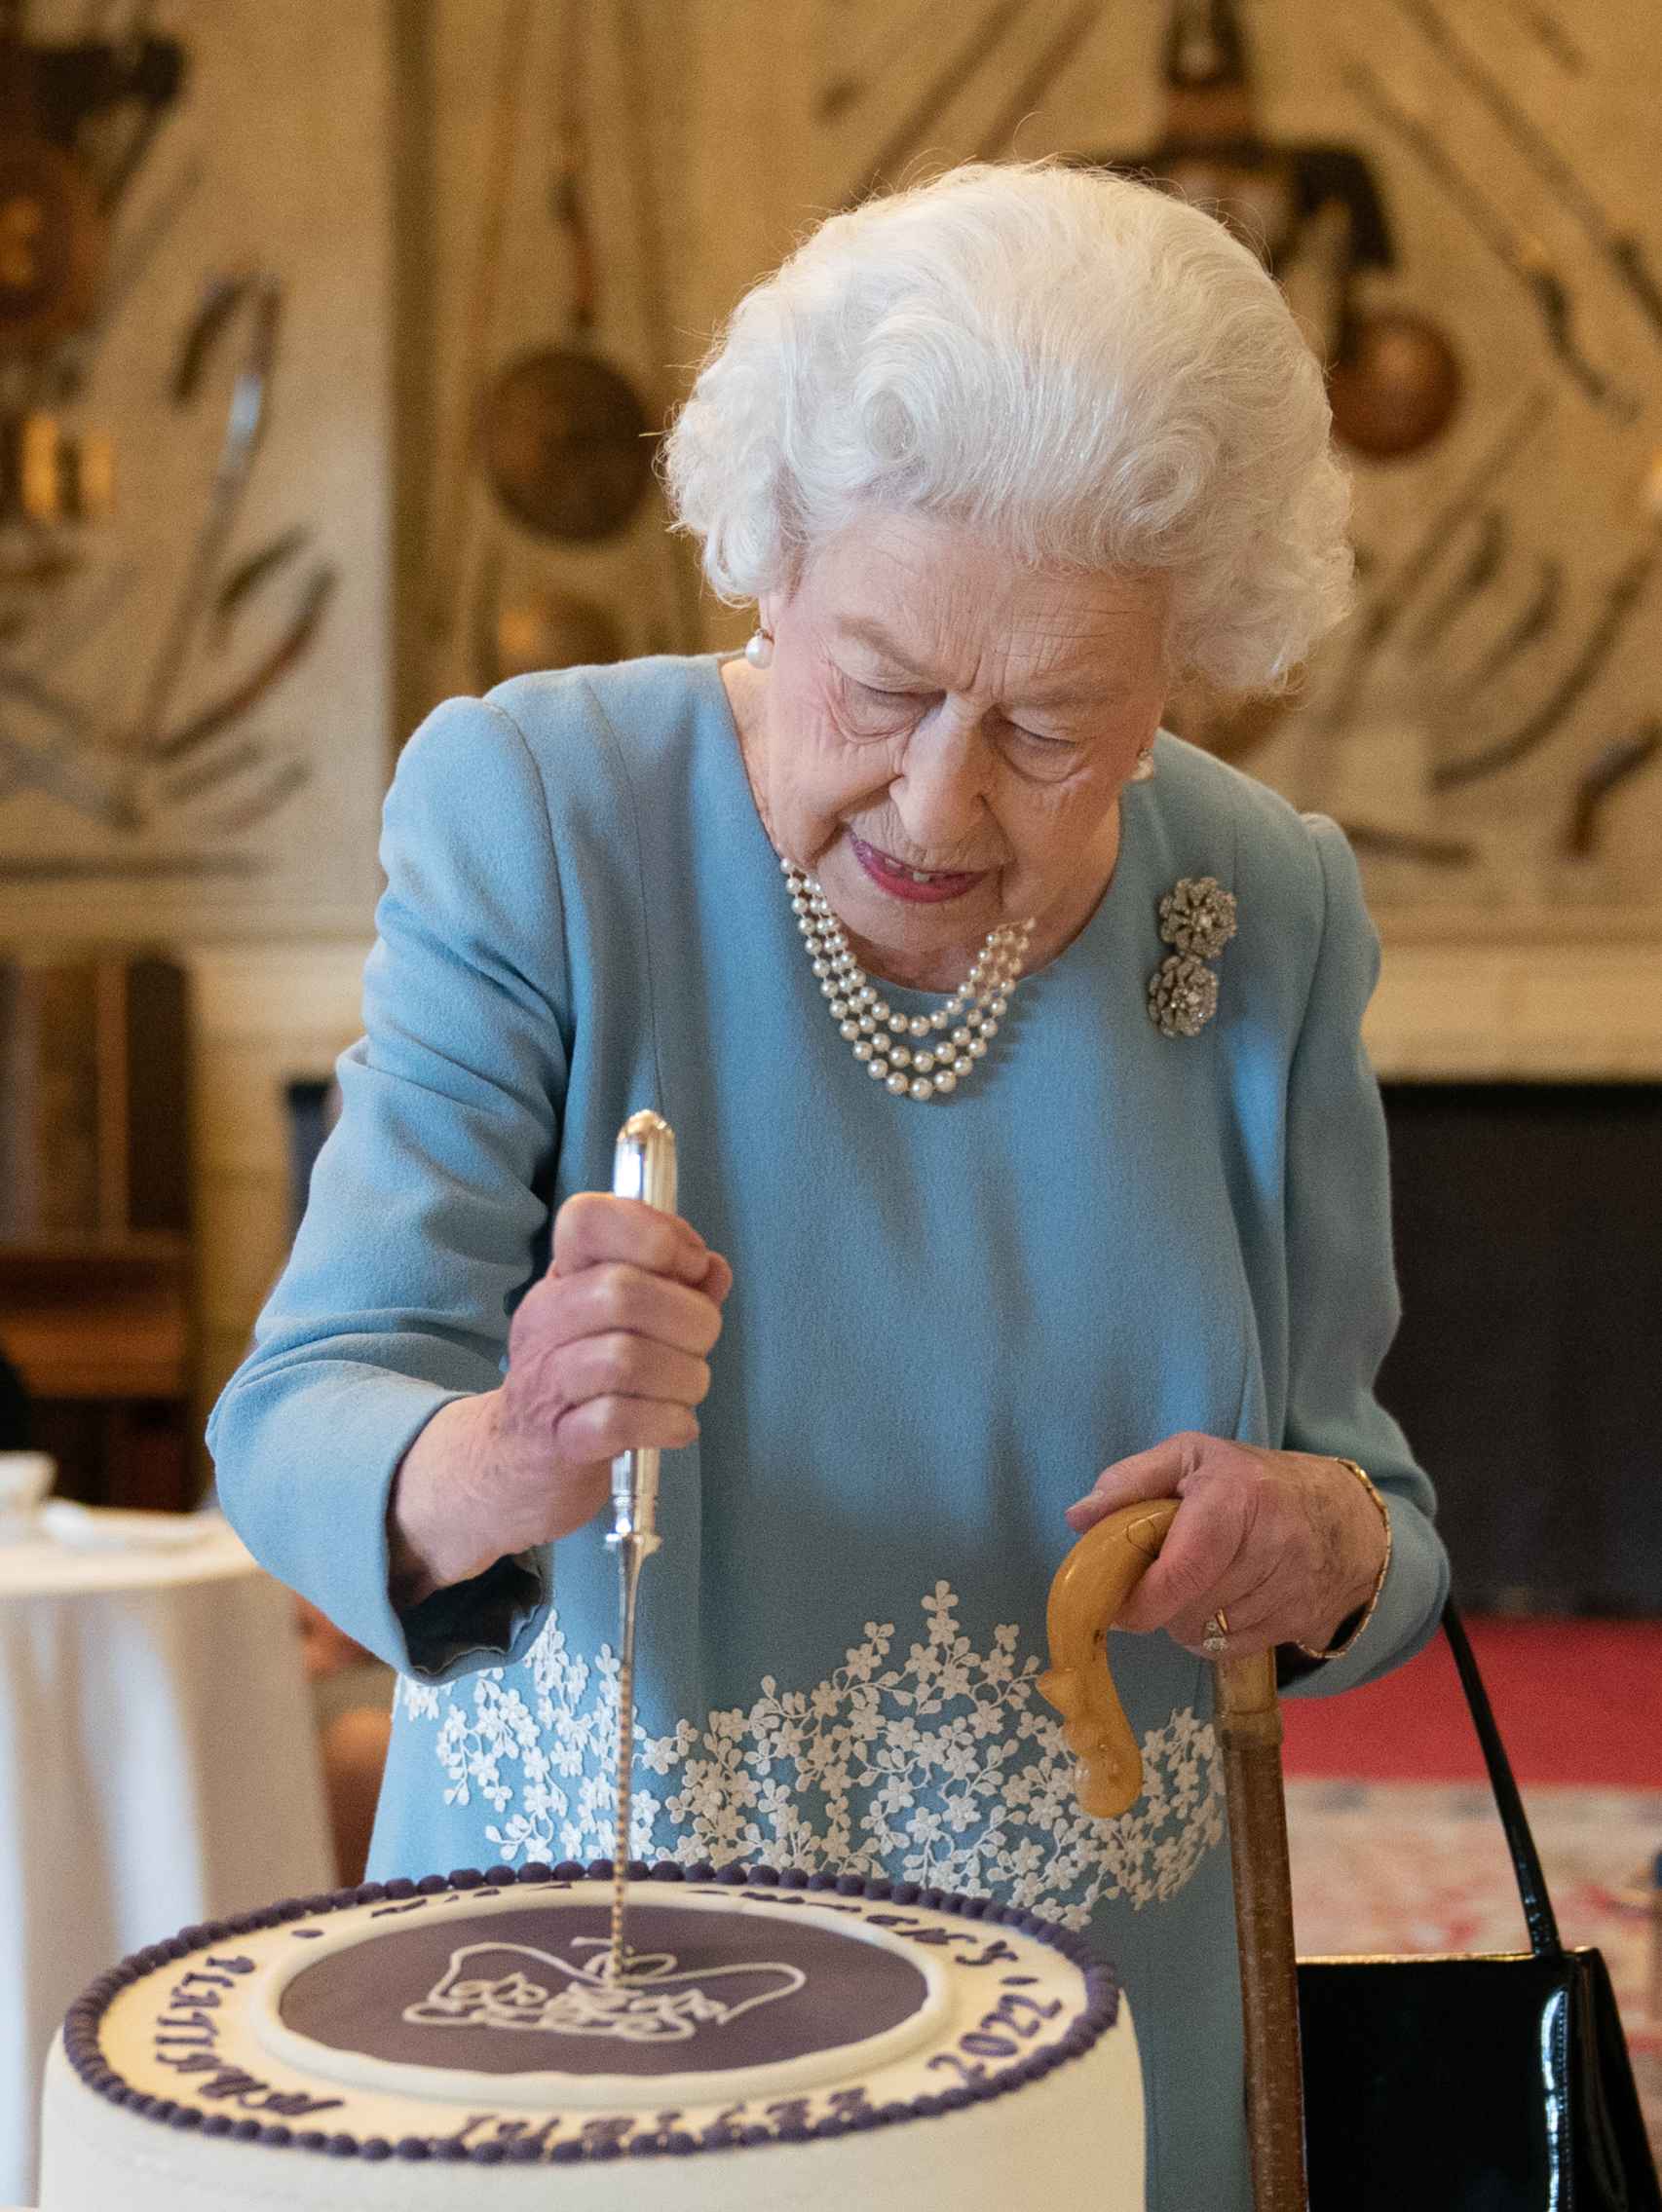 La reina cortando la tarta con el símbolo del jubileo.